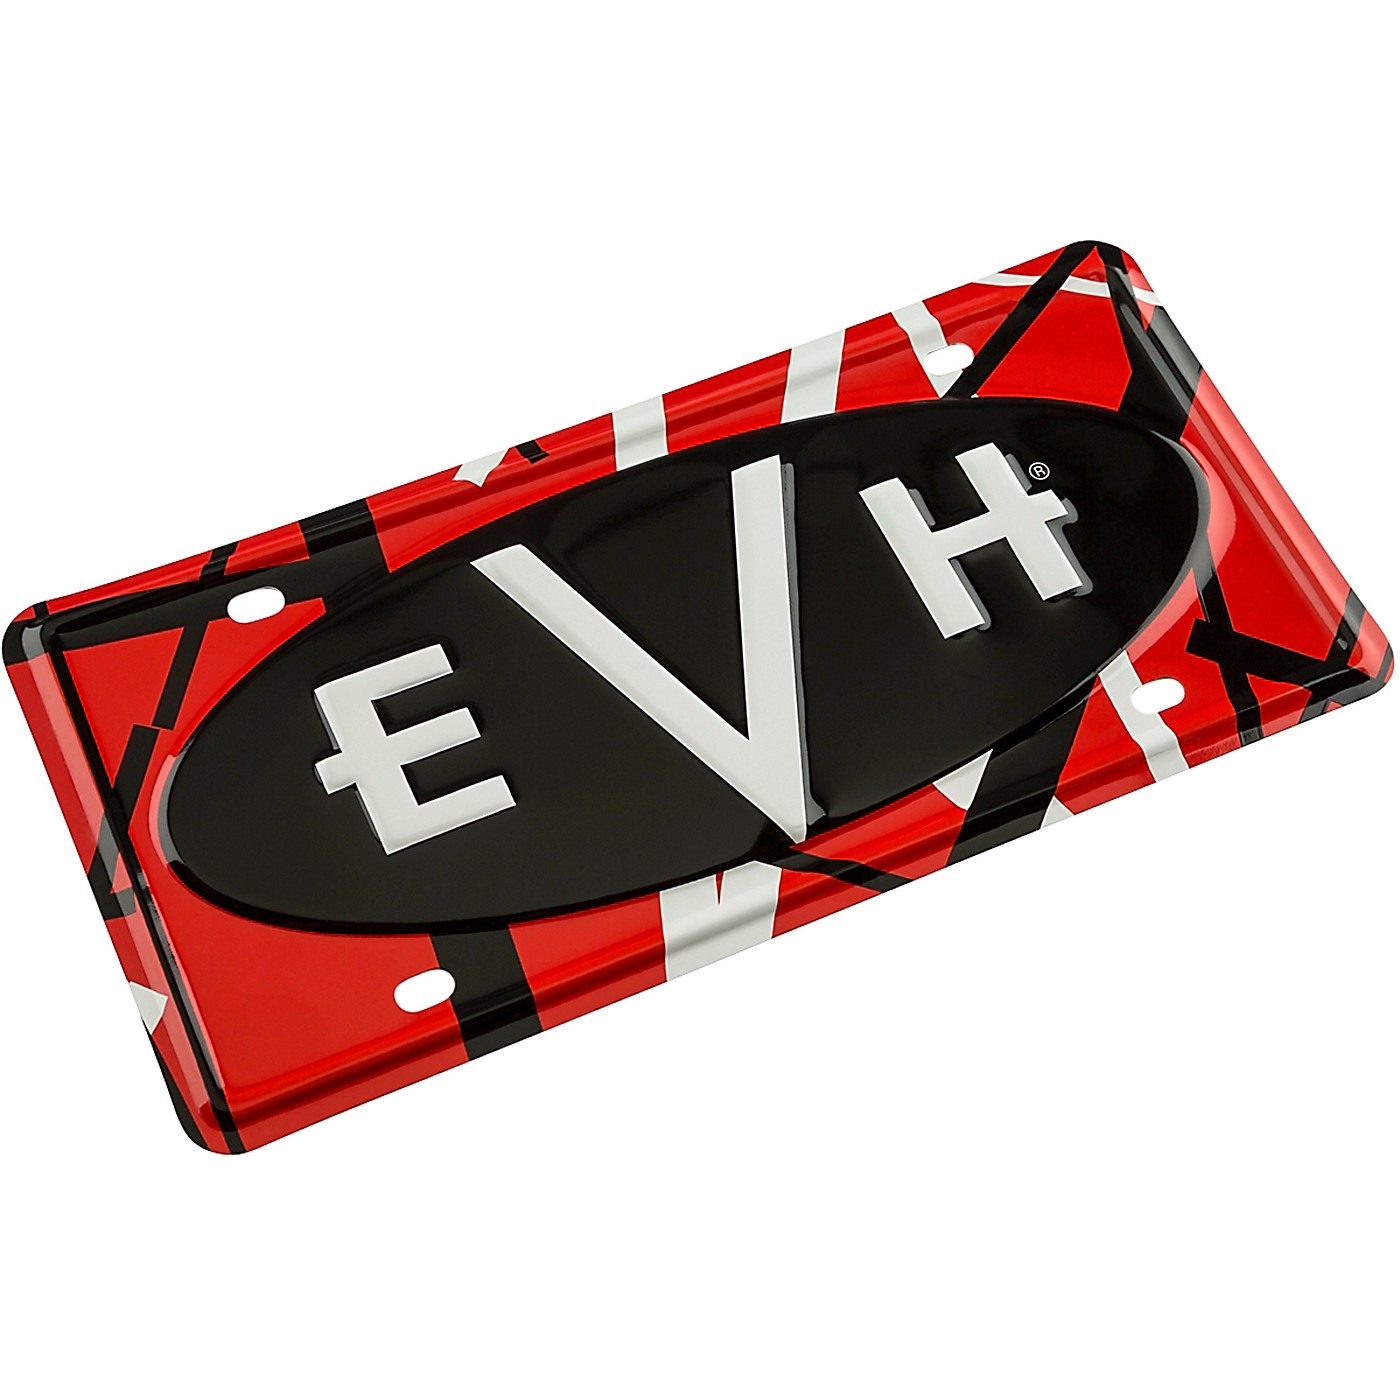 EVH Logo License Plate thumbnail